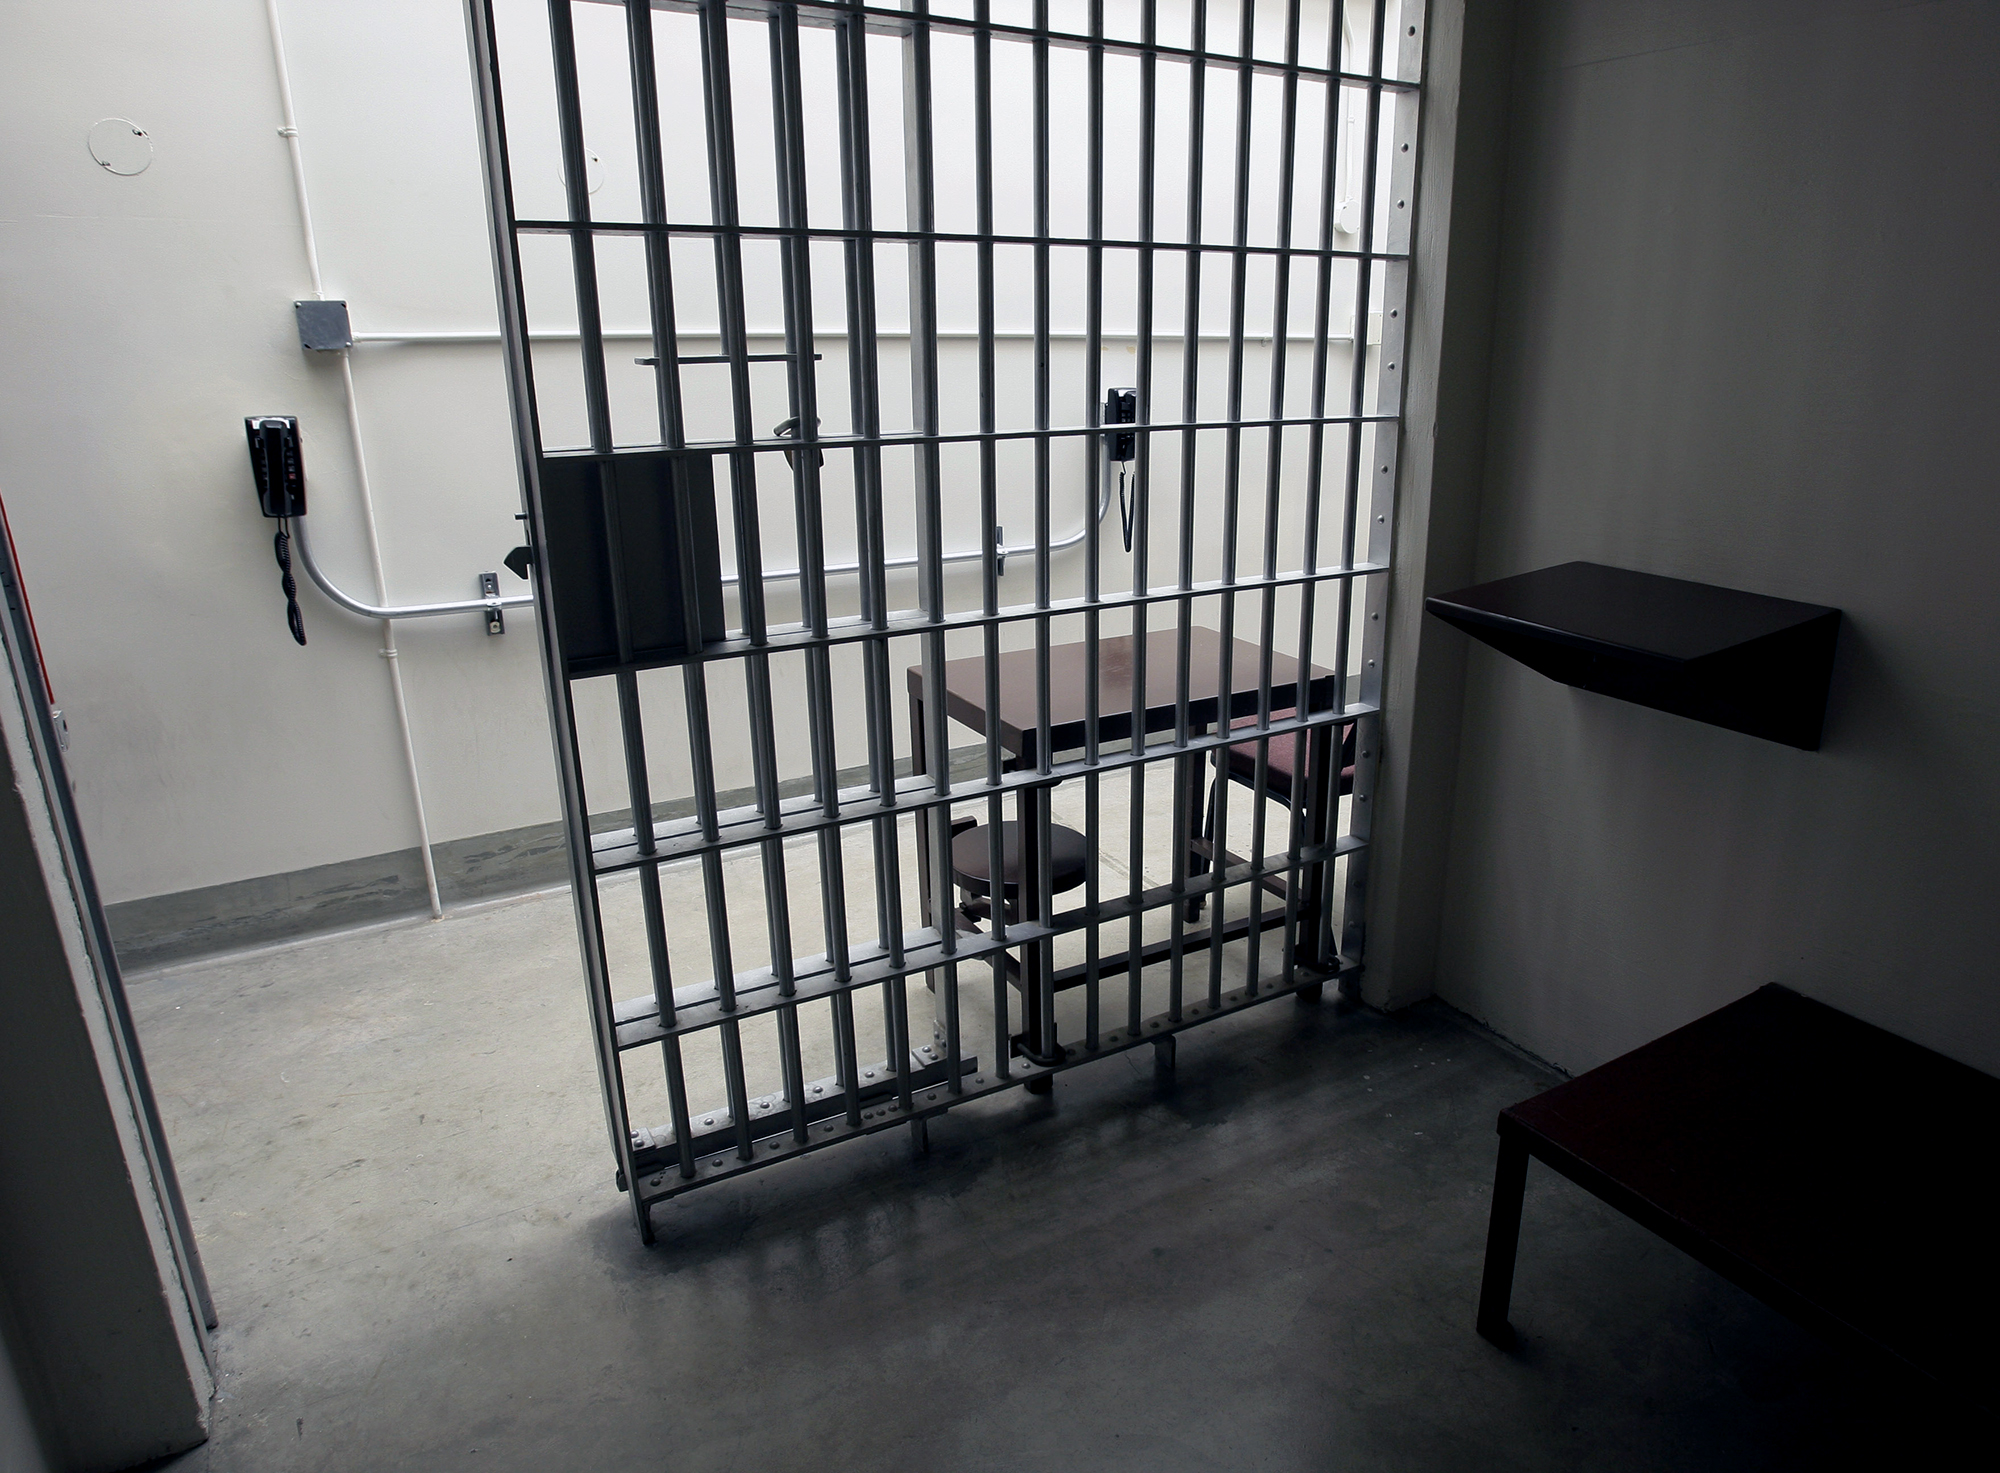 Deaths in WA prisons draw scrutiny from state Legislature | Crosscut